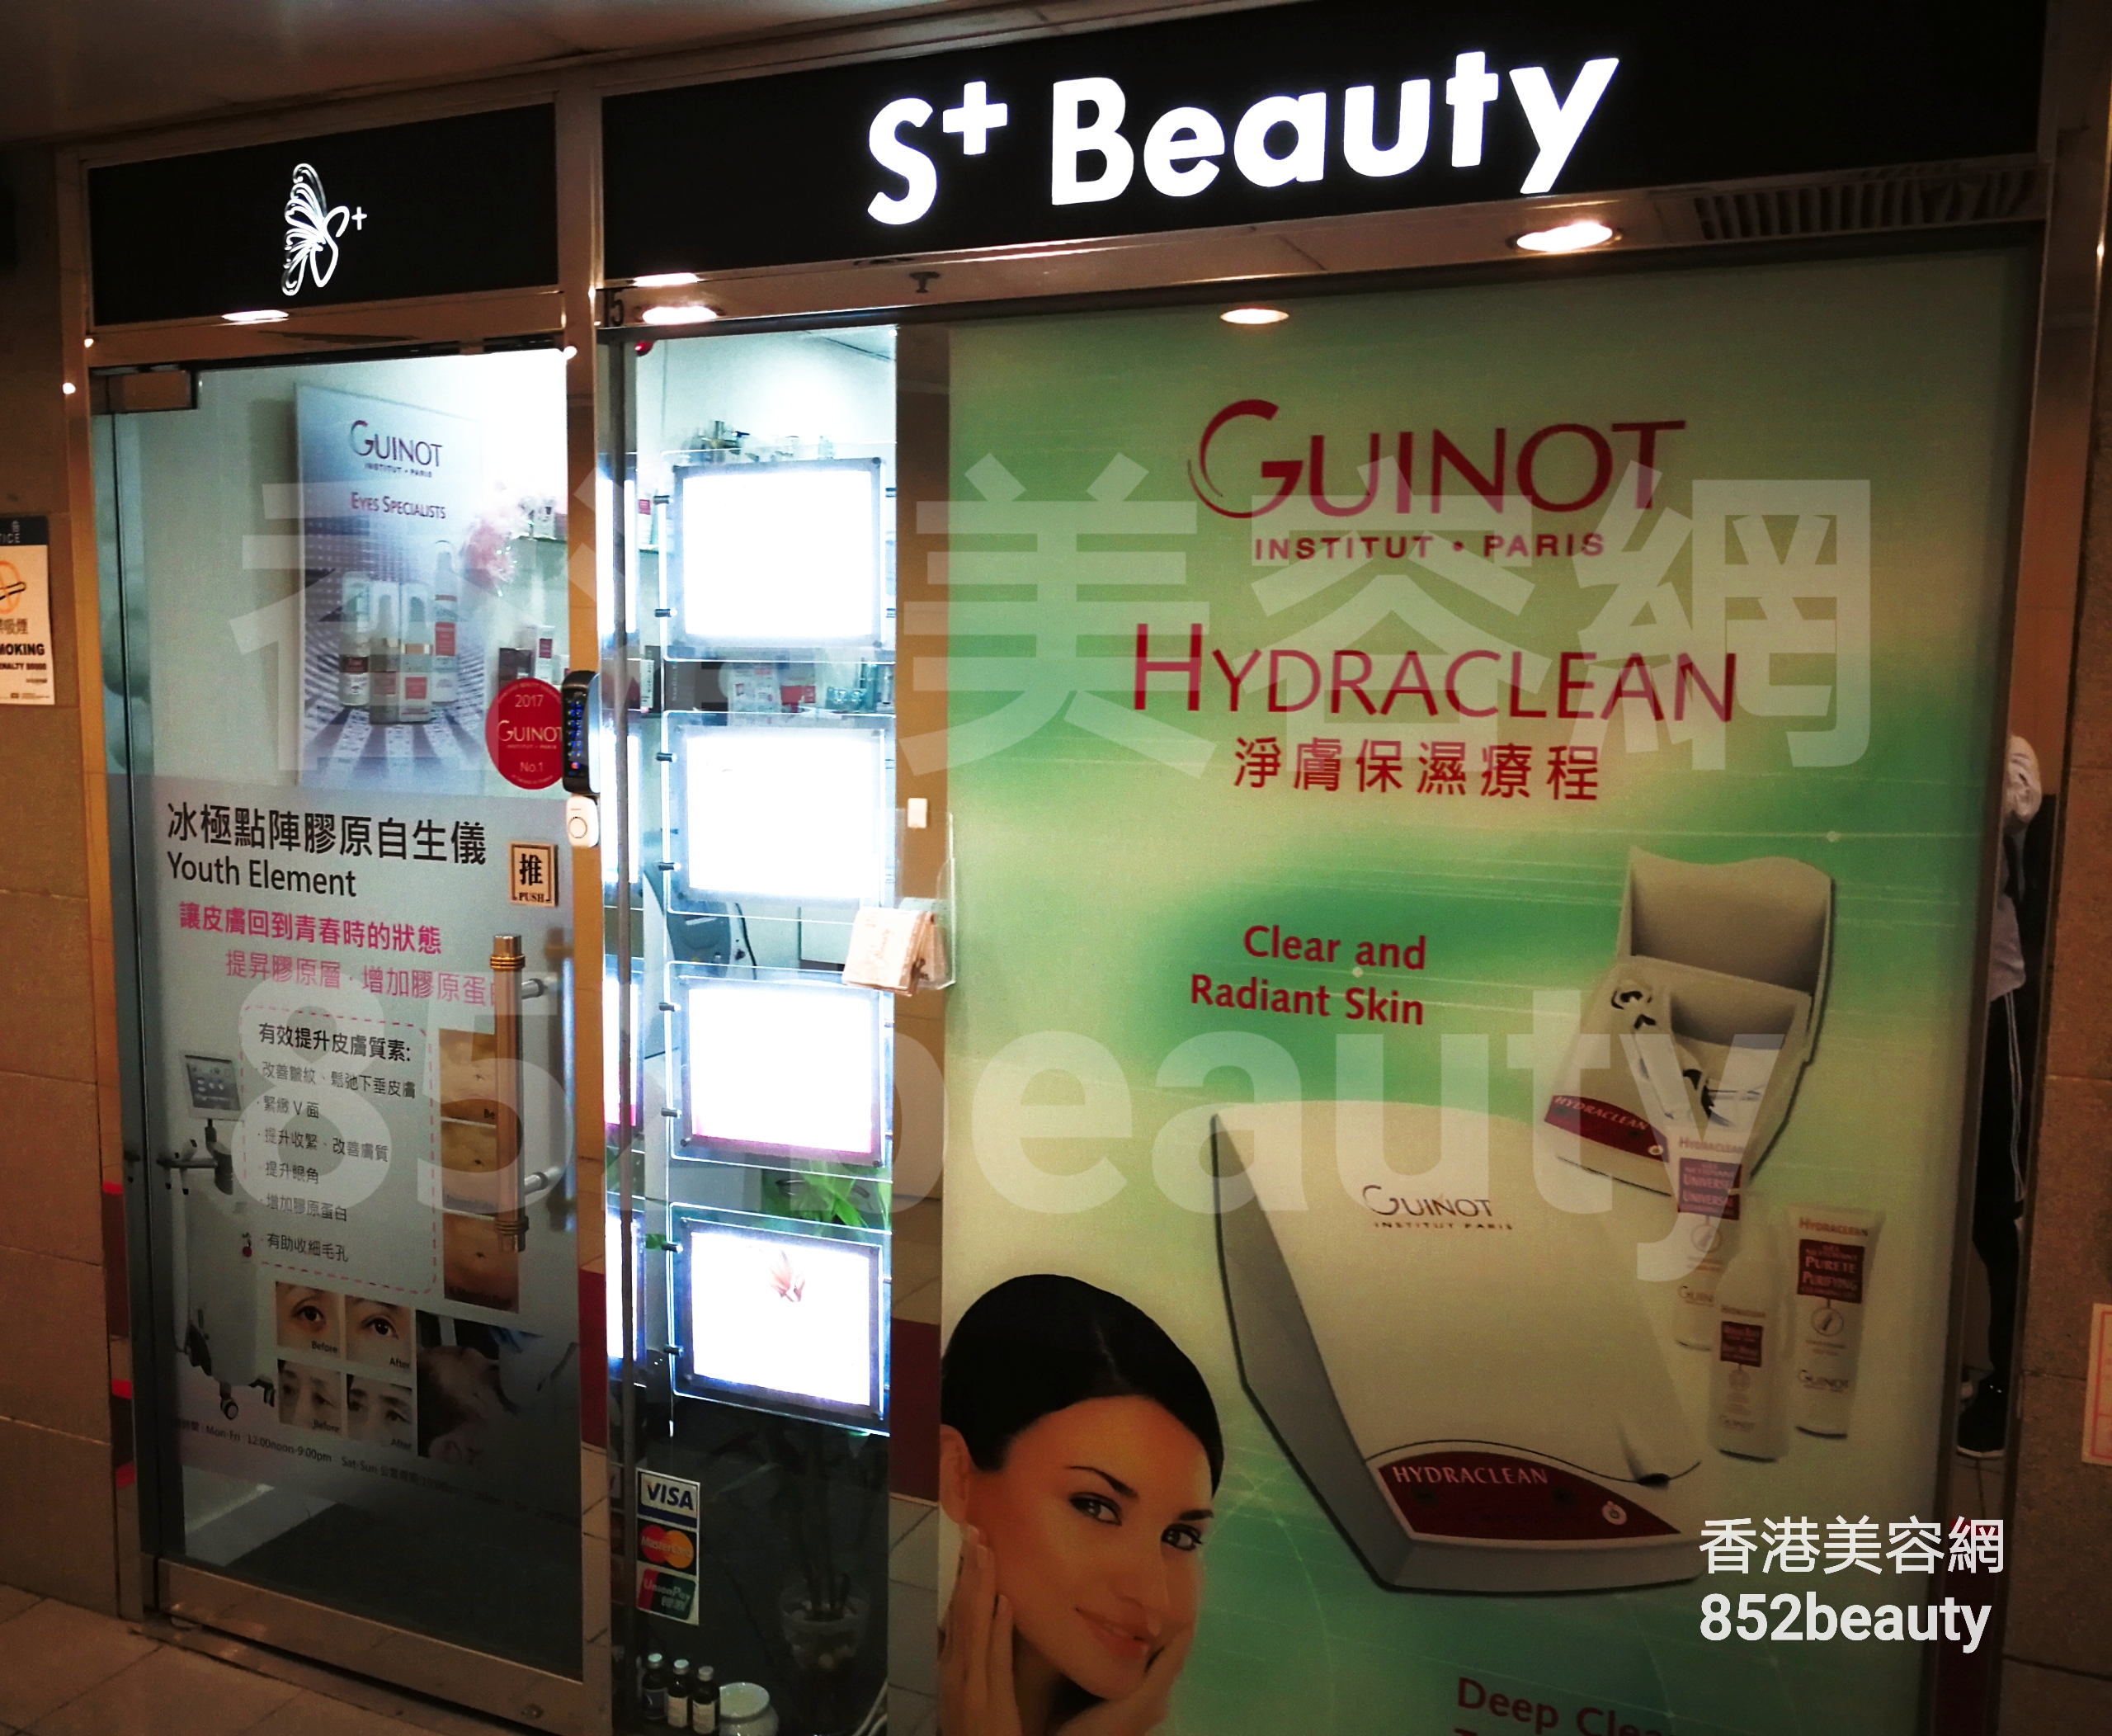 Beauty Salon / Beautician: S+ Beauty